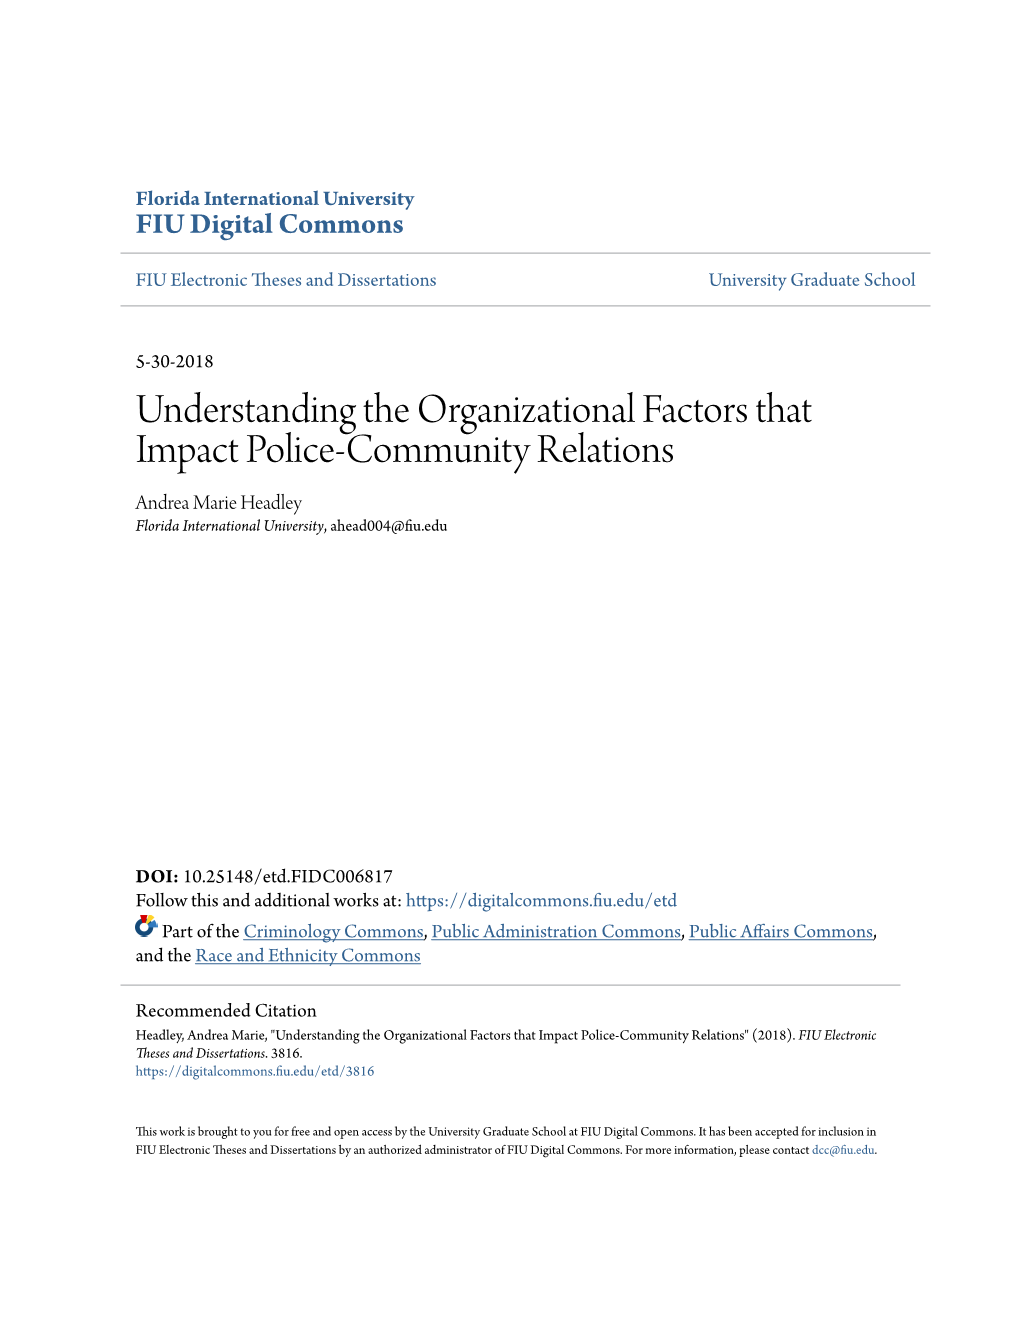 Understanding the Organizational Factors That Impact Police-Community Relations Andrea Marie Headley Florida International University, Ahead004@Fiu.Edu